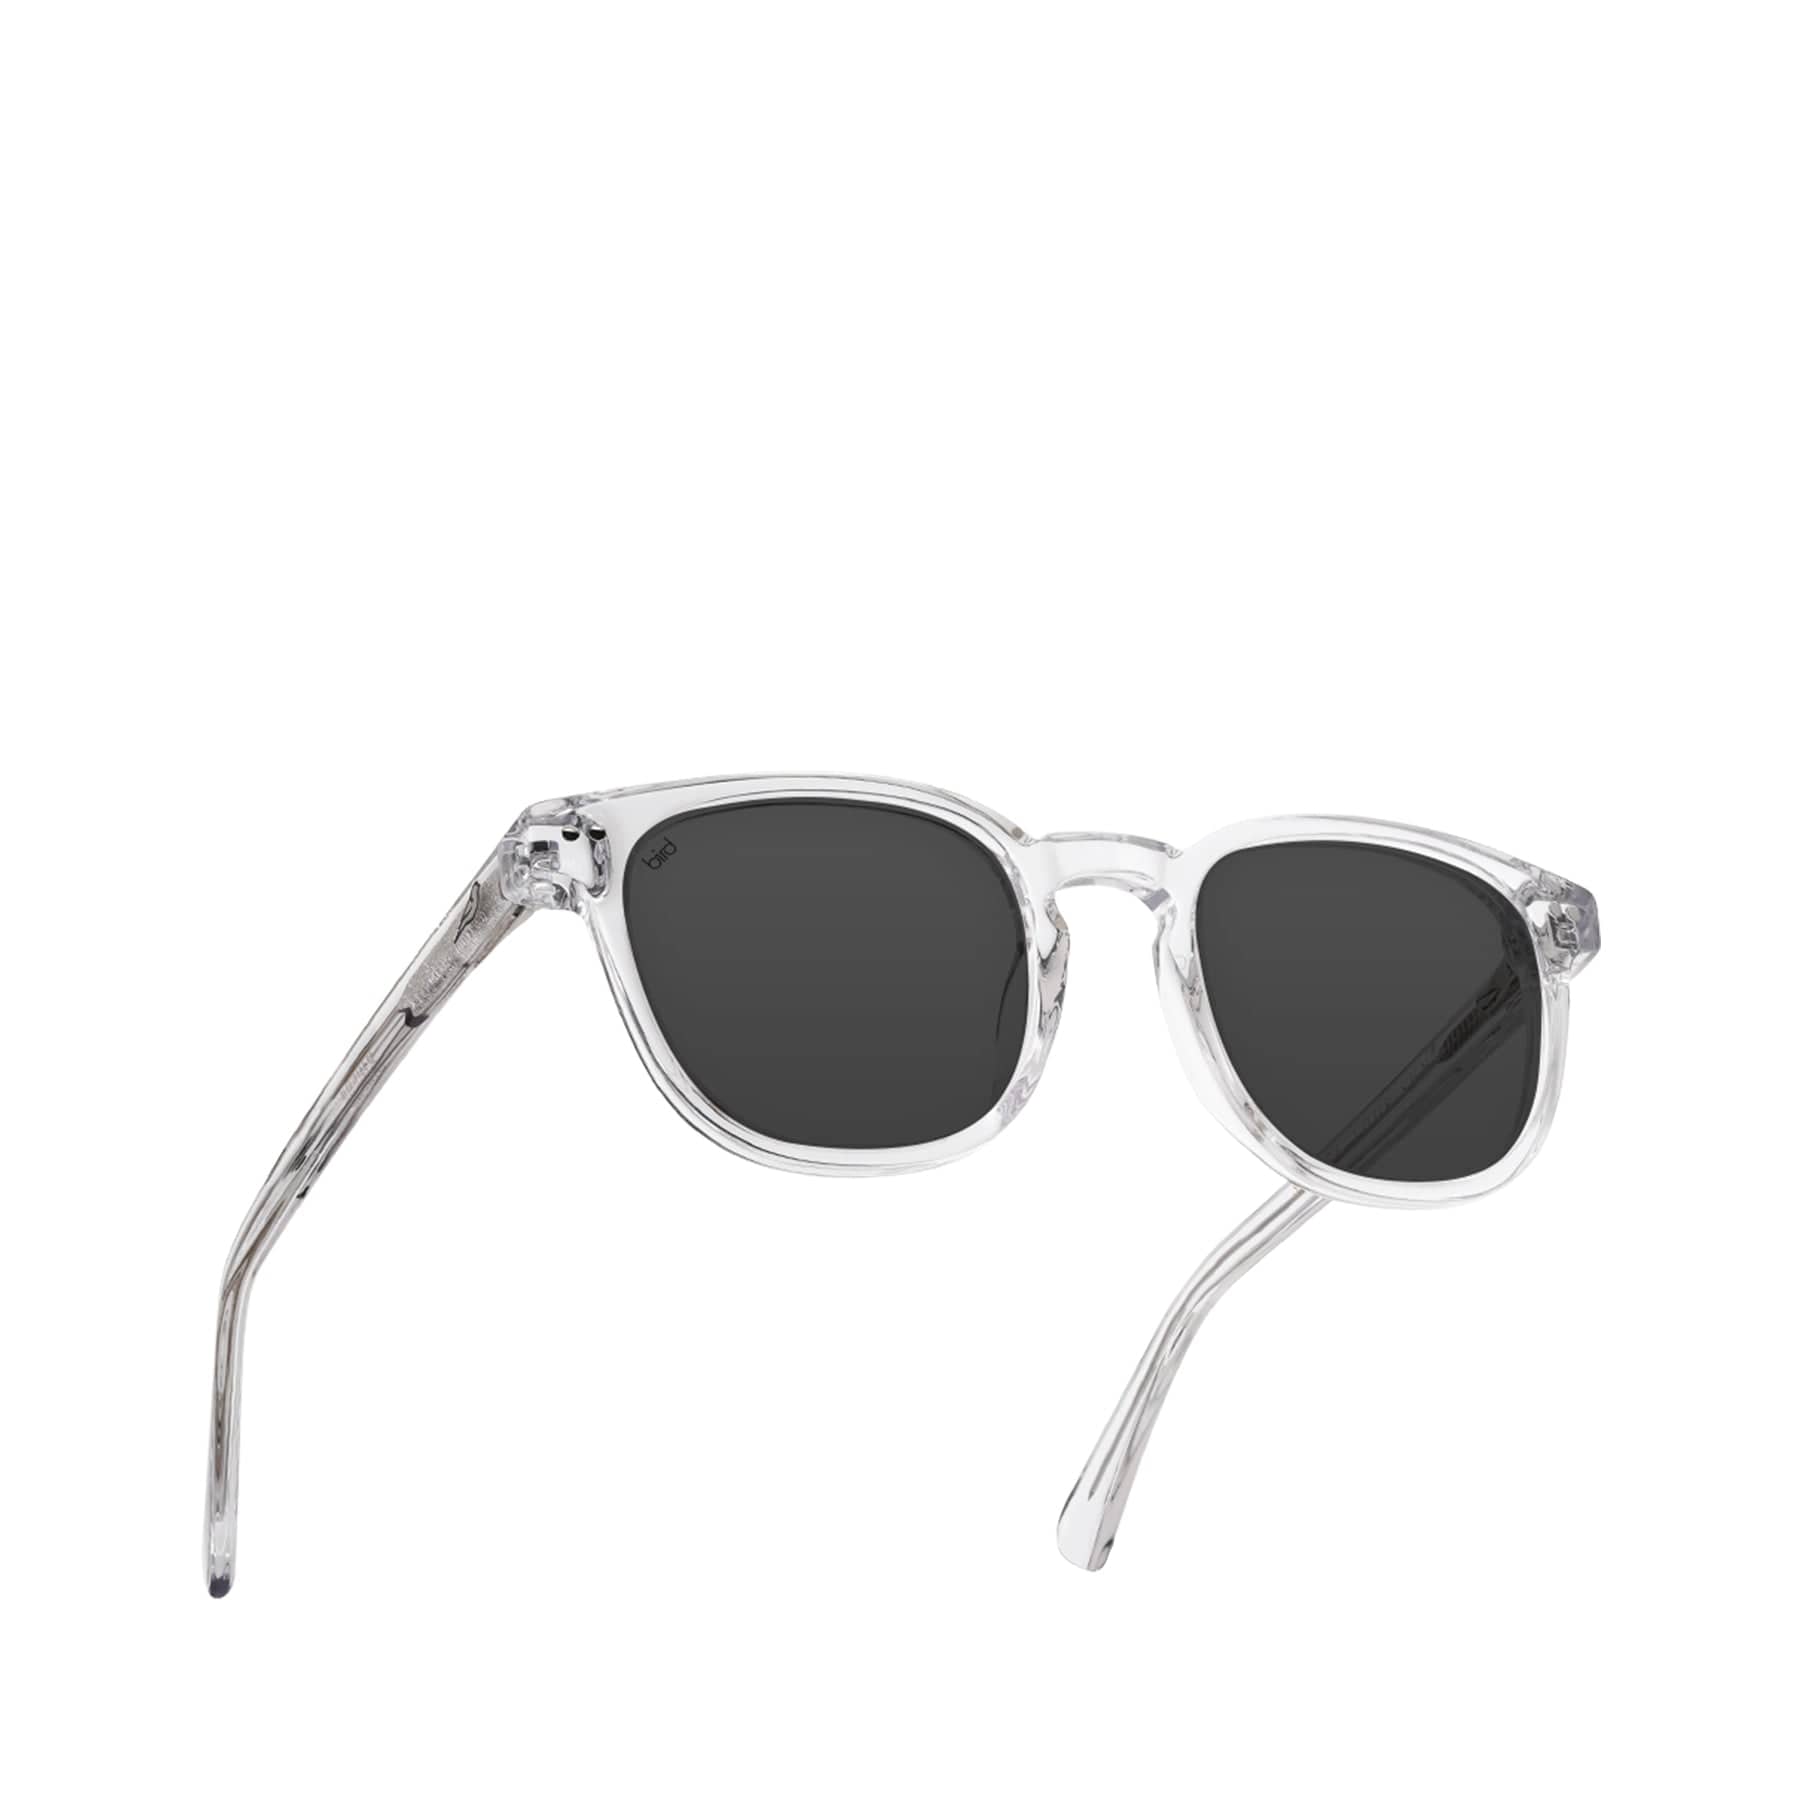 Athene sunglasses clear charcoal lens